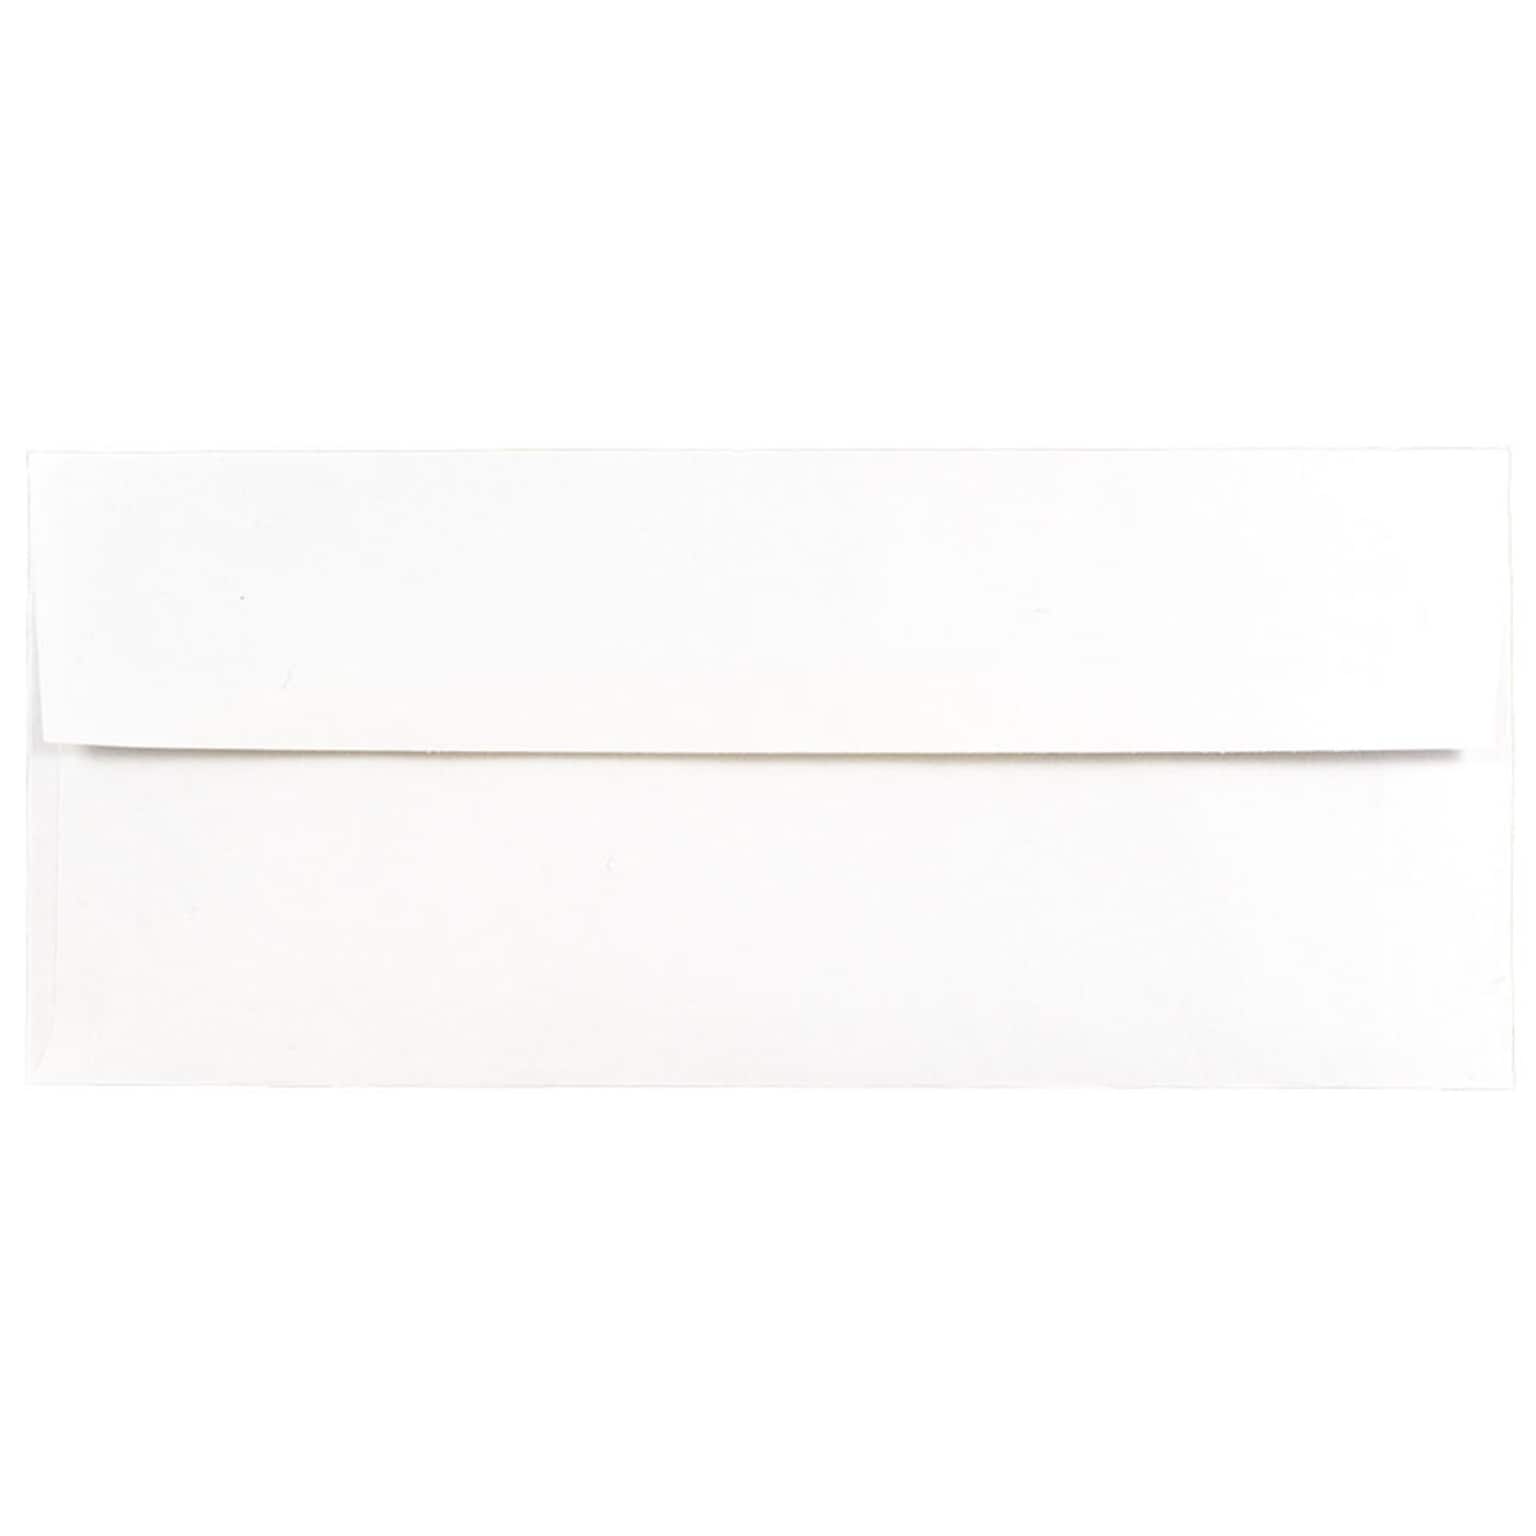 JAM PAPER 3 7/8 x 8 1/8 Foil Lined Invitation Envelopes, White with Silver Foil, 50/Pack (352231723I)